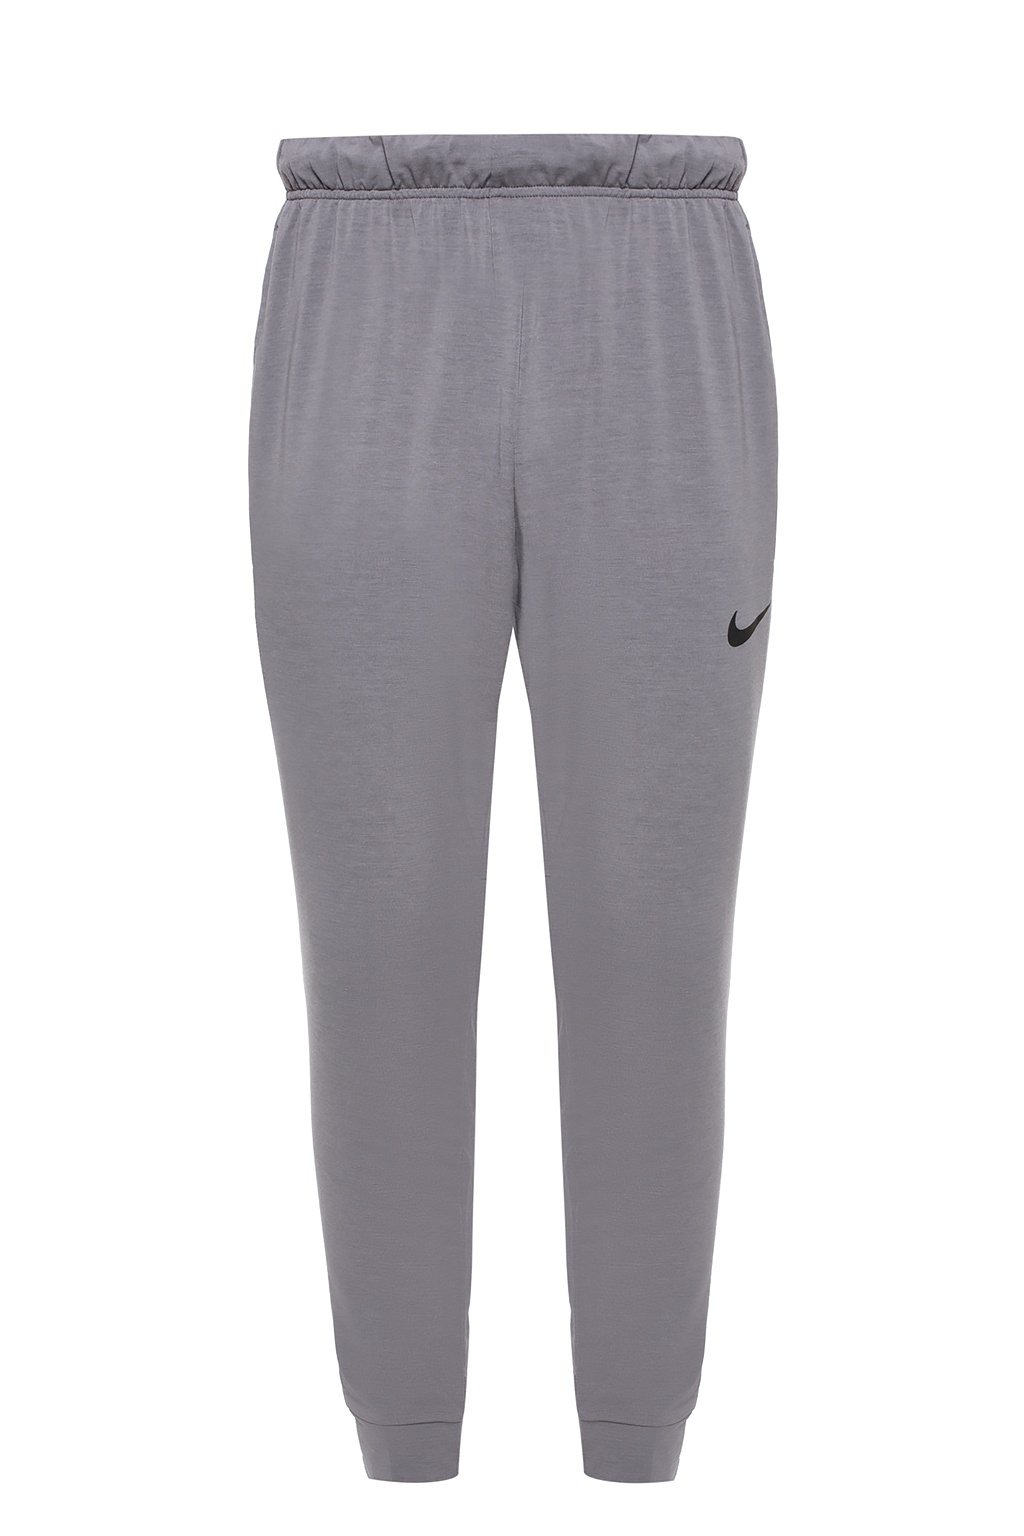 Sweatpants with logo Nike - Vitkac 